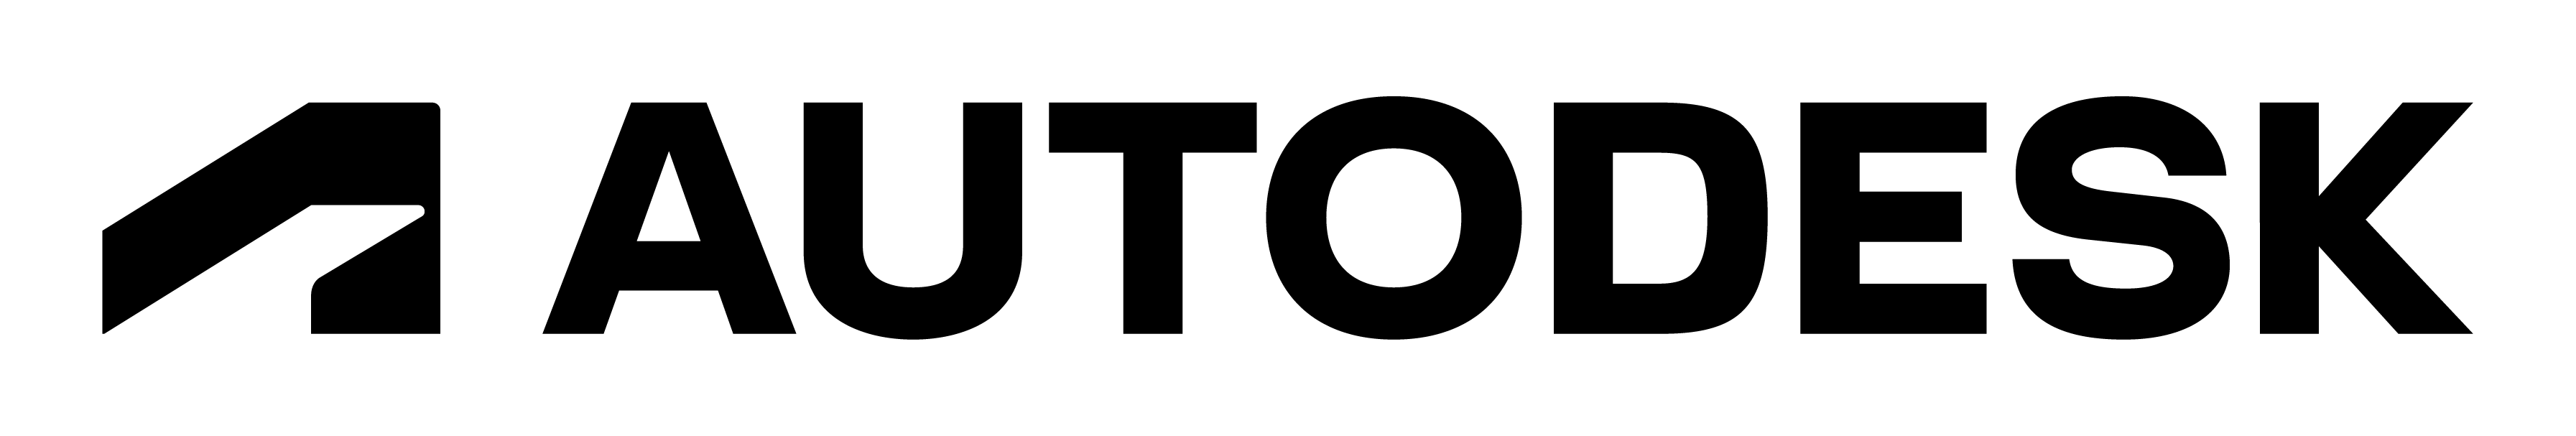 Autodesk-black-logo